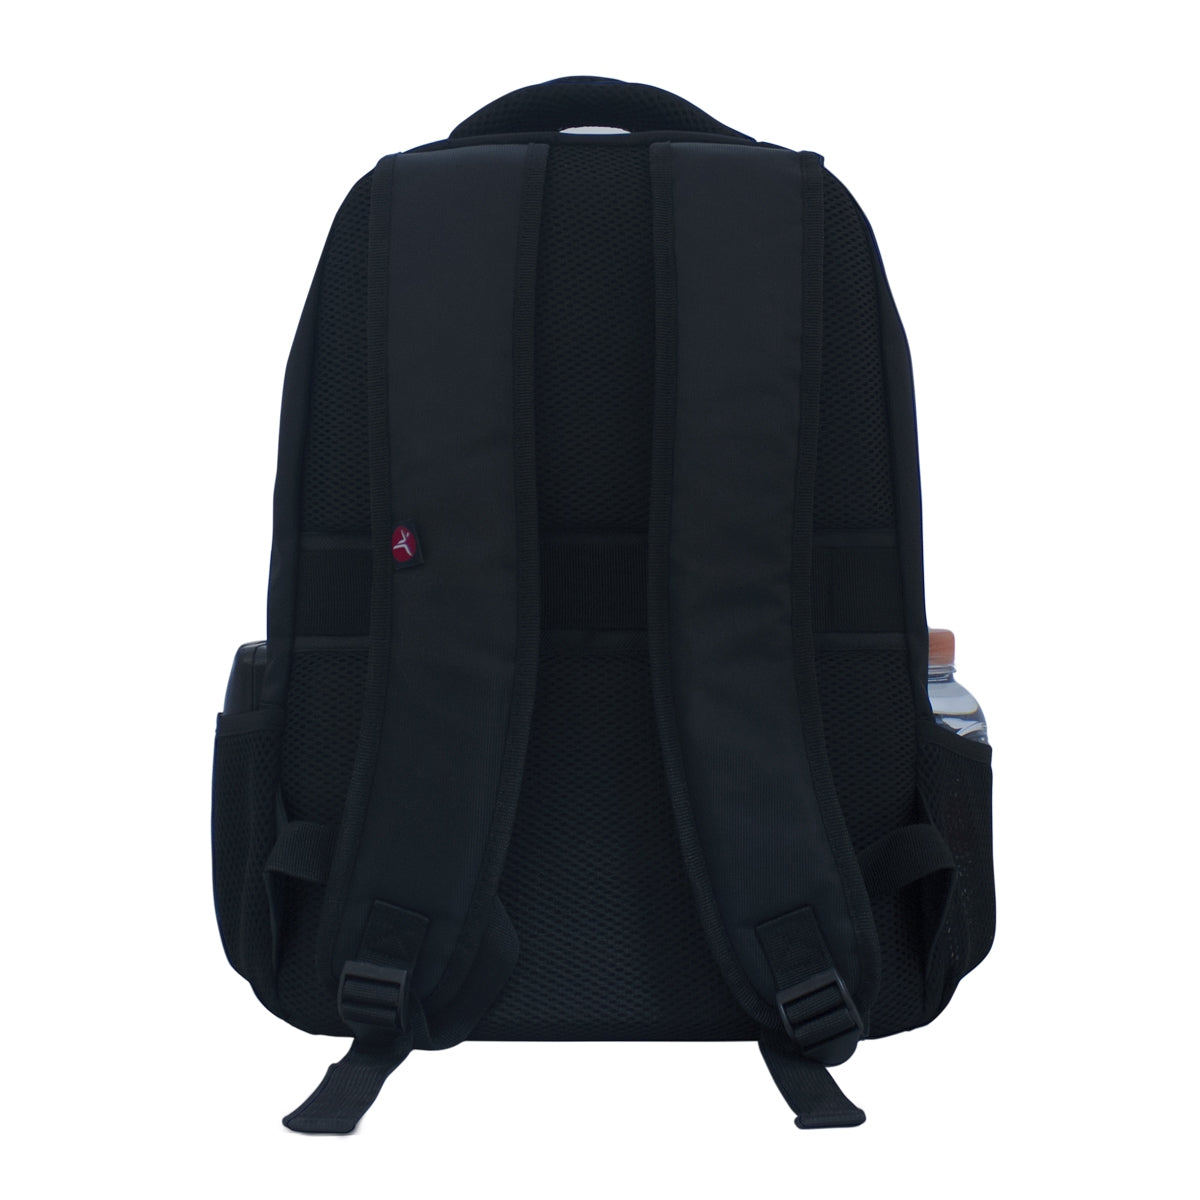 Backpack Techzone Tz19Lbp05-N 15.6 Pulgadas Mochila Negro